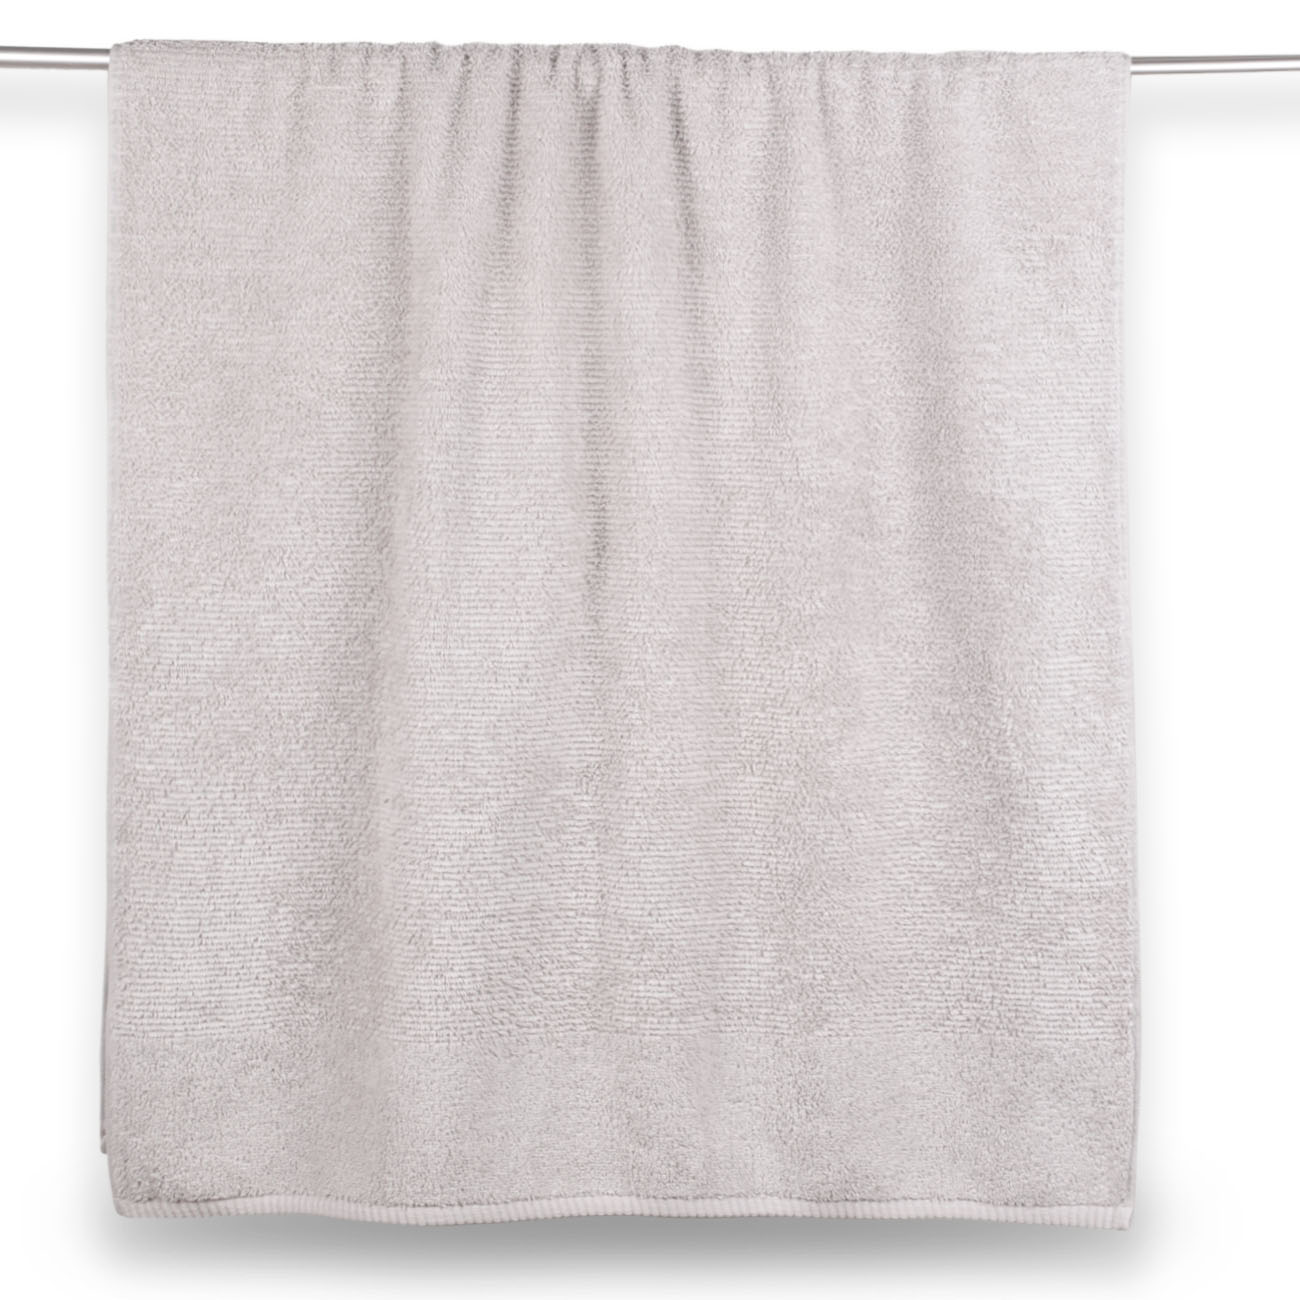 Towel, 70x140 cm, cotton, light gray, Terry cotton изображение № 3